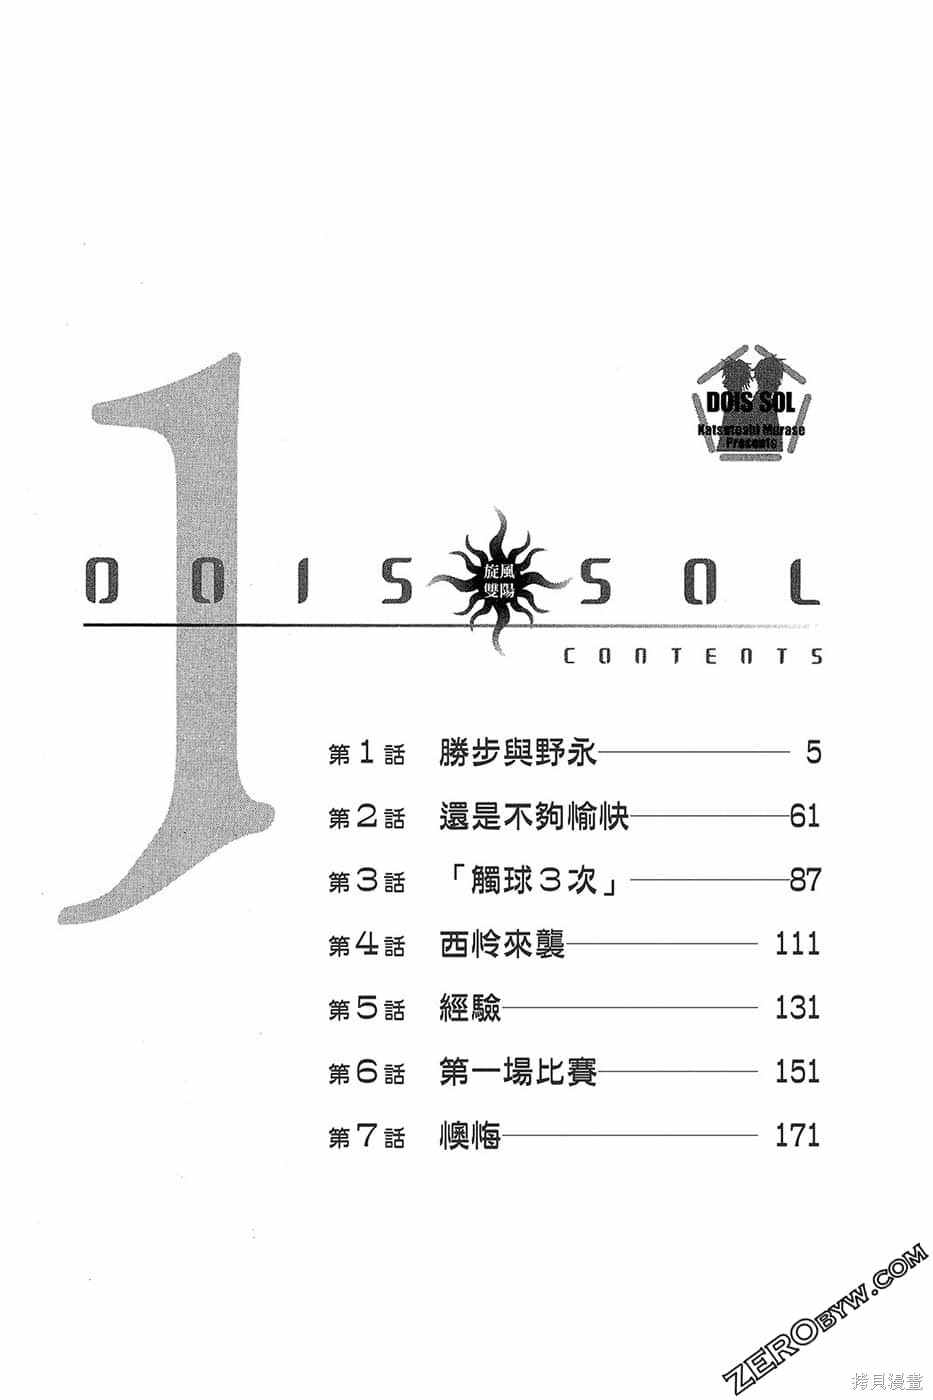 DOIS SOL旋风双阳 - 第1卷(1/4) - 3